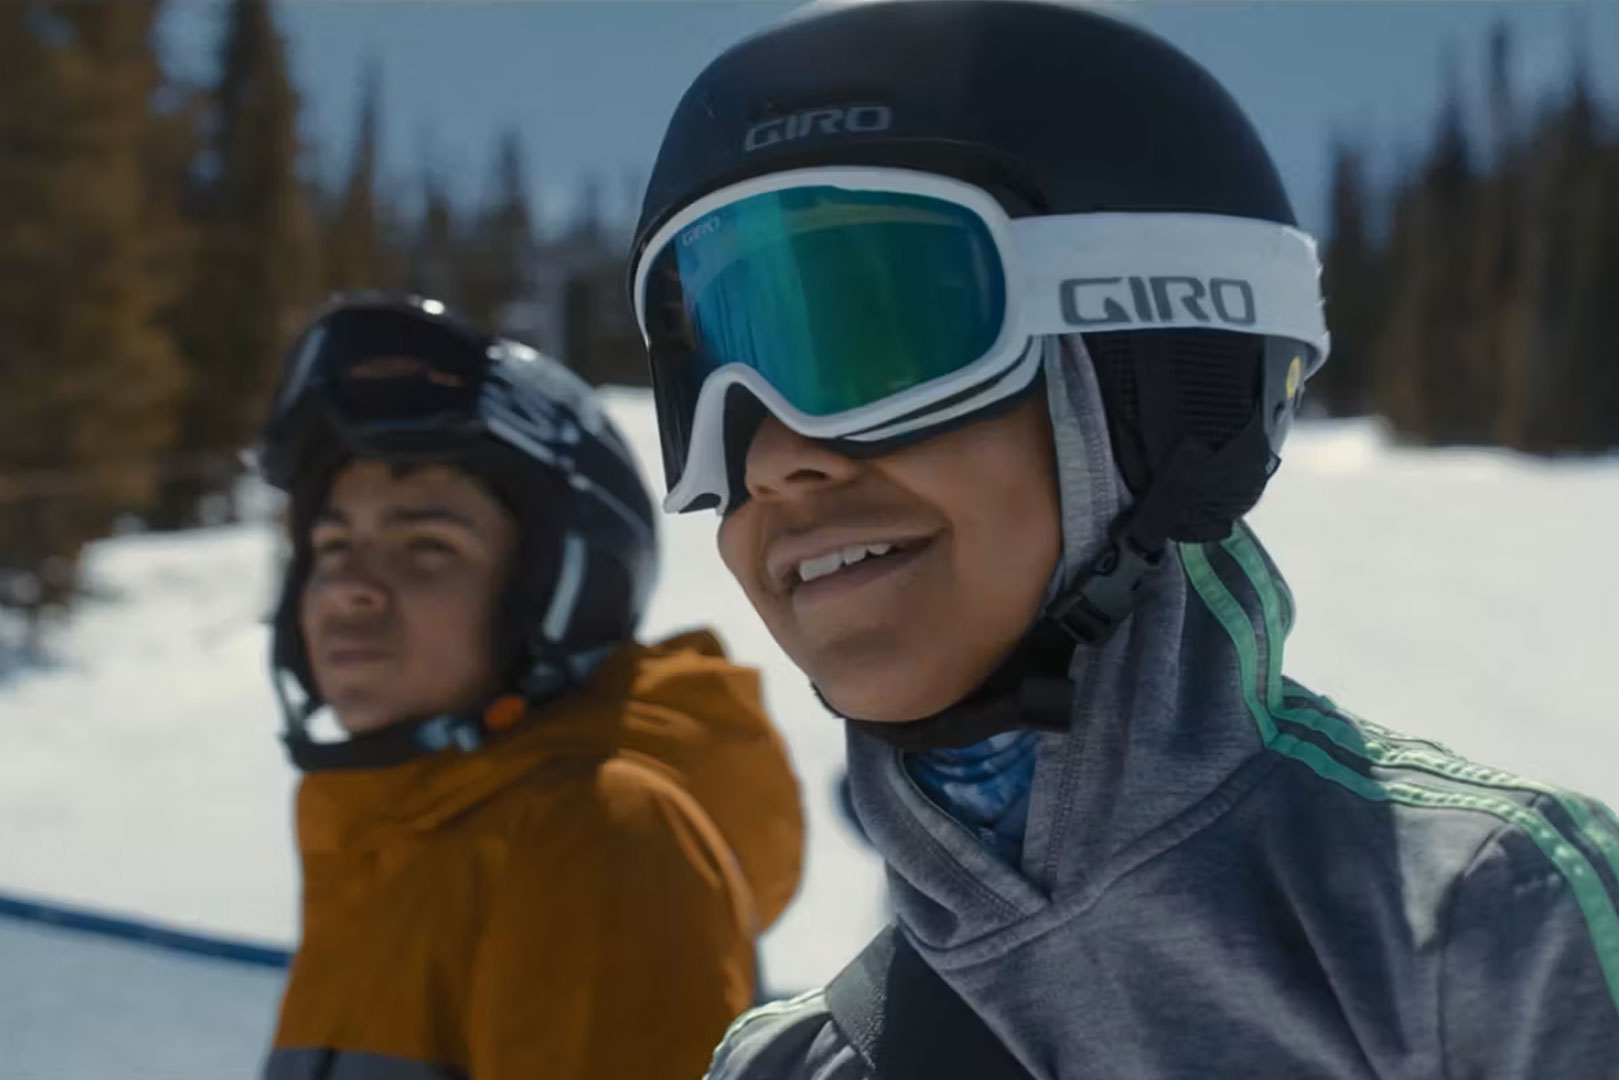 Close up image of 2 boys wearing ski goggles and helmets at ski resort